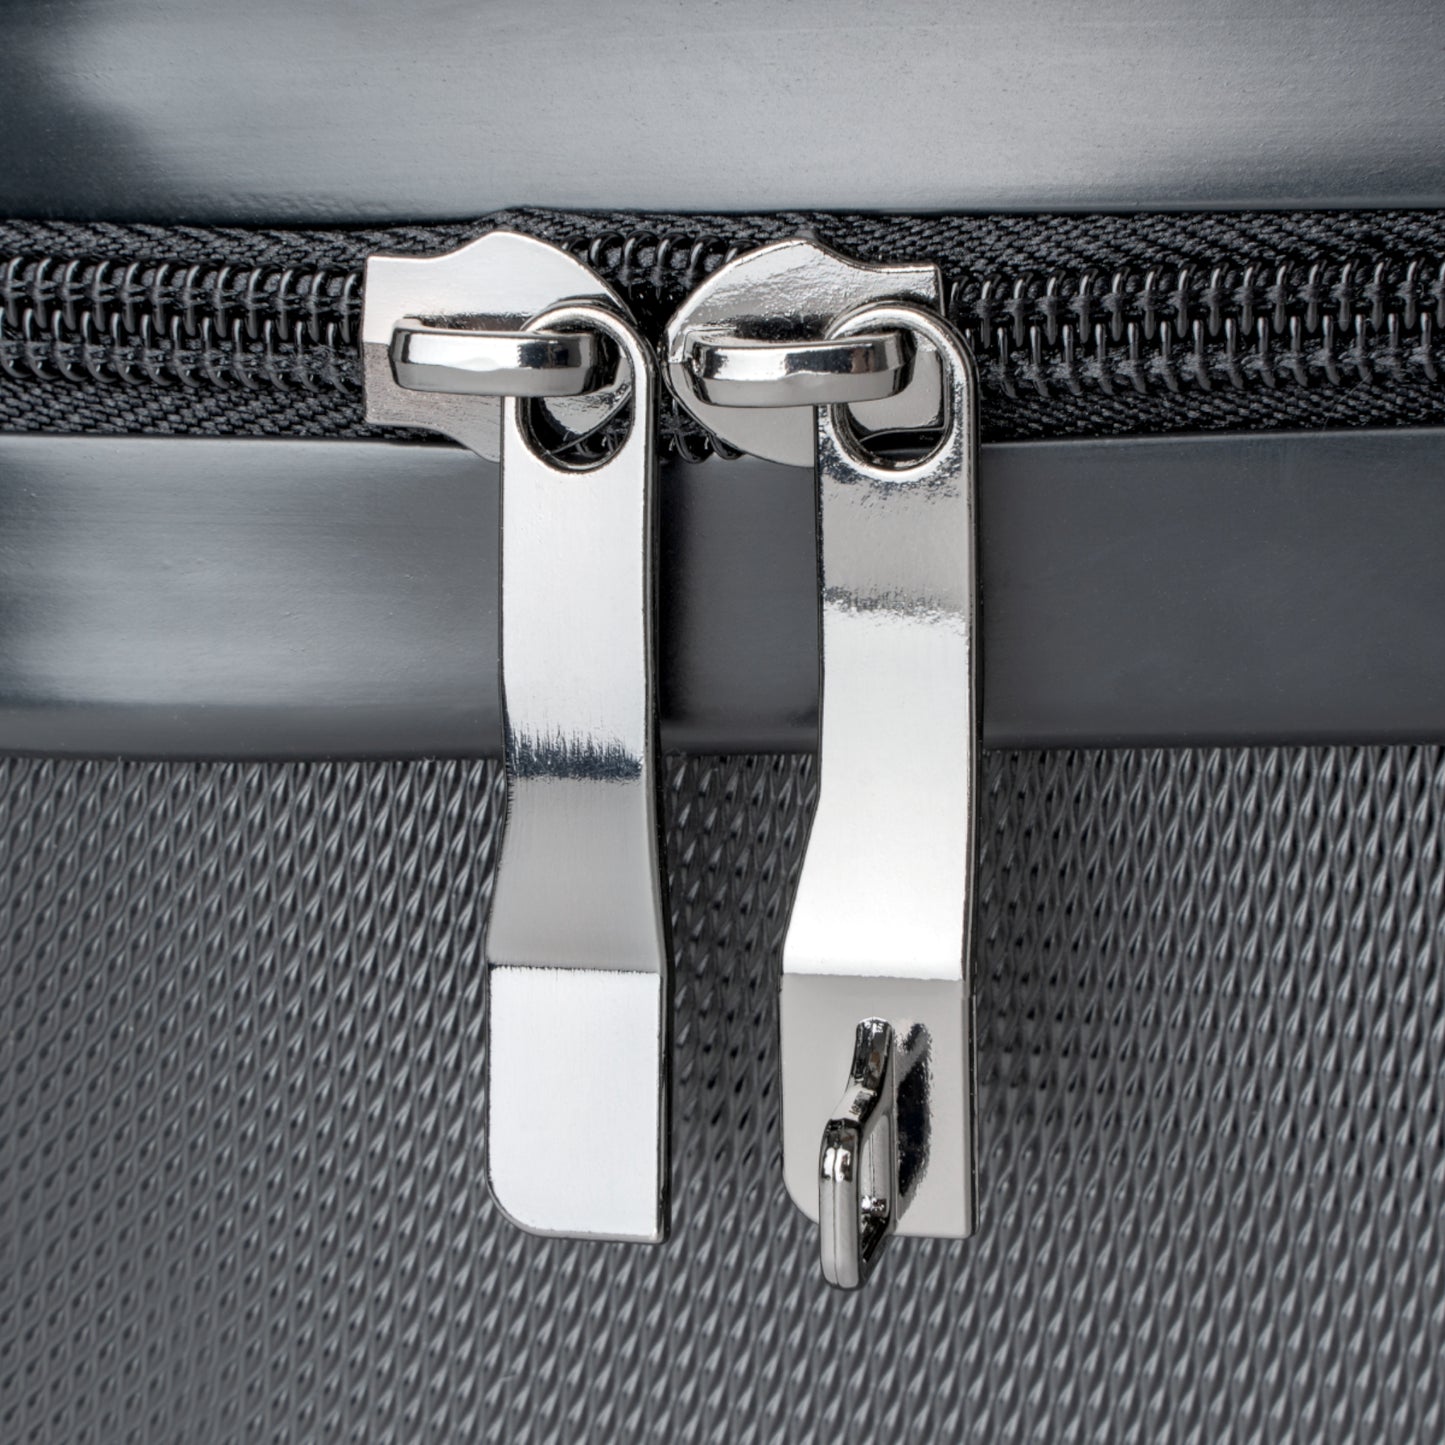 Daisy Gardenias  Carry On Suitcase (+ 2 Sizes)